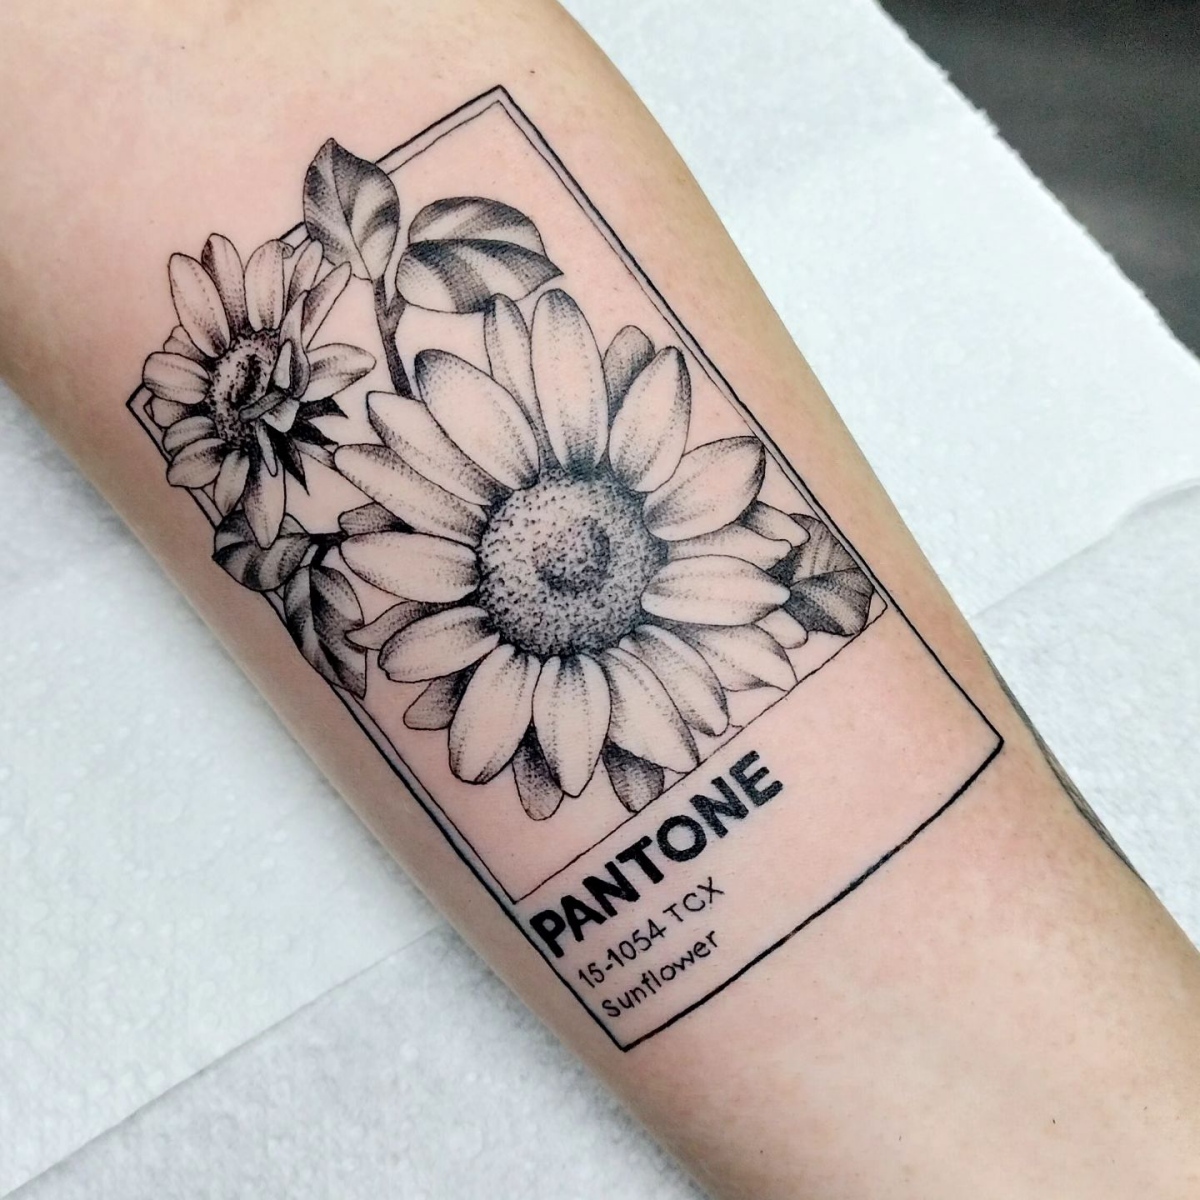 pantone swatch card tattoo idea with sunflowers